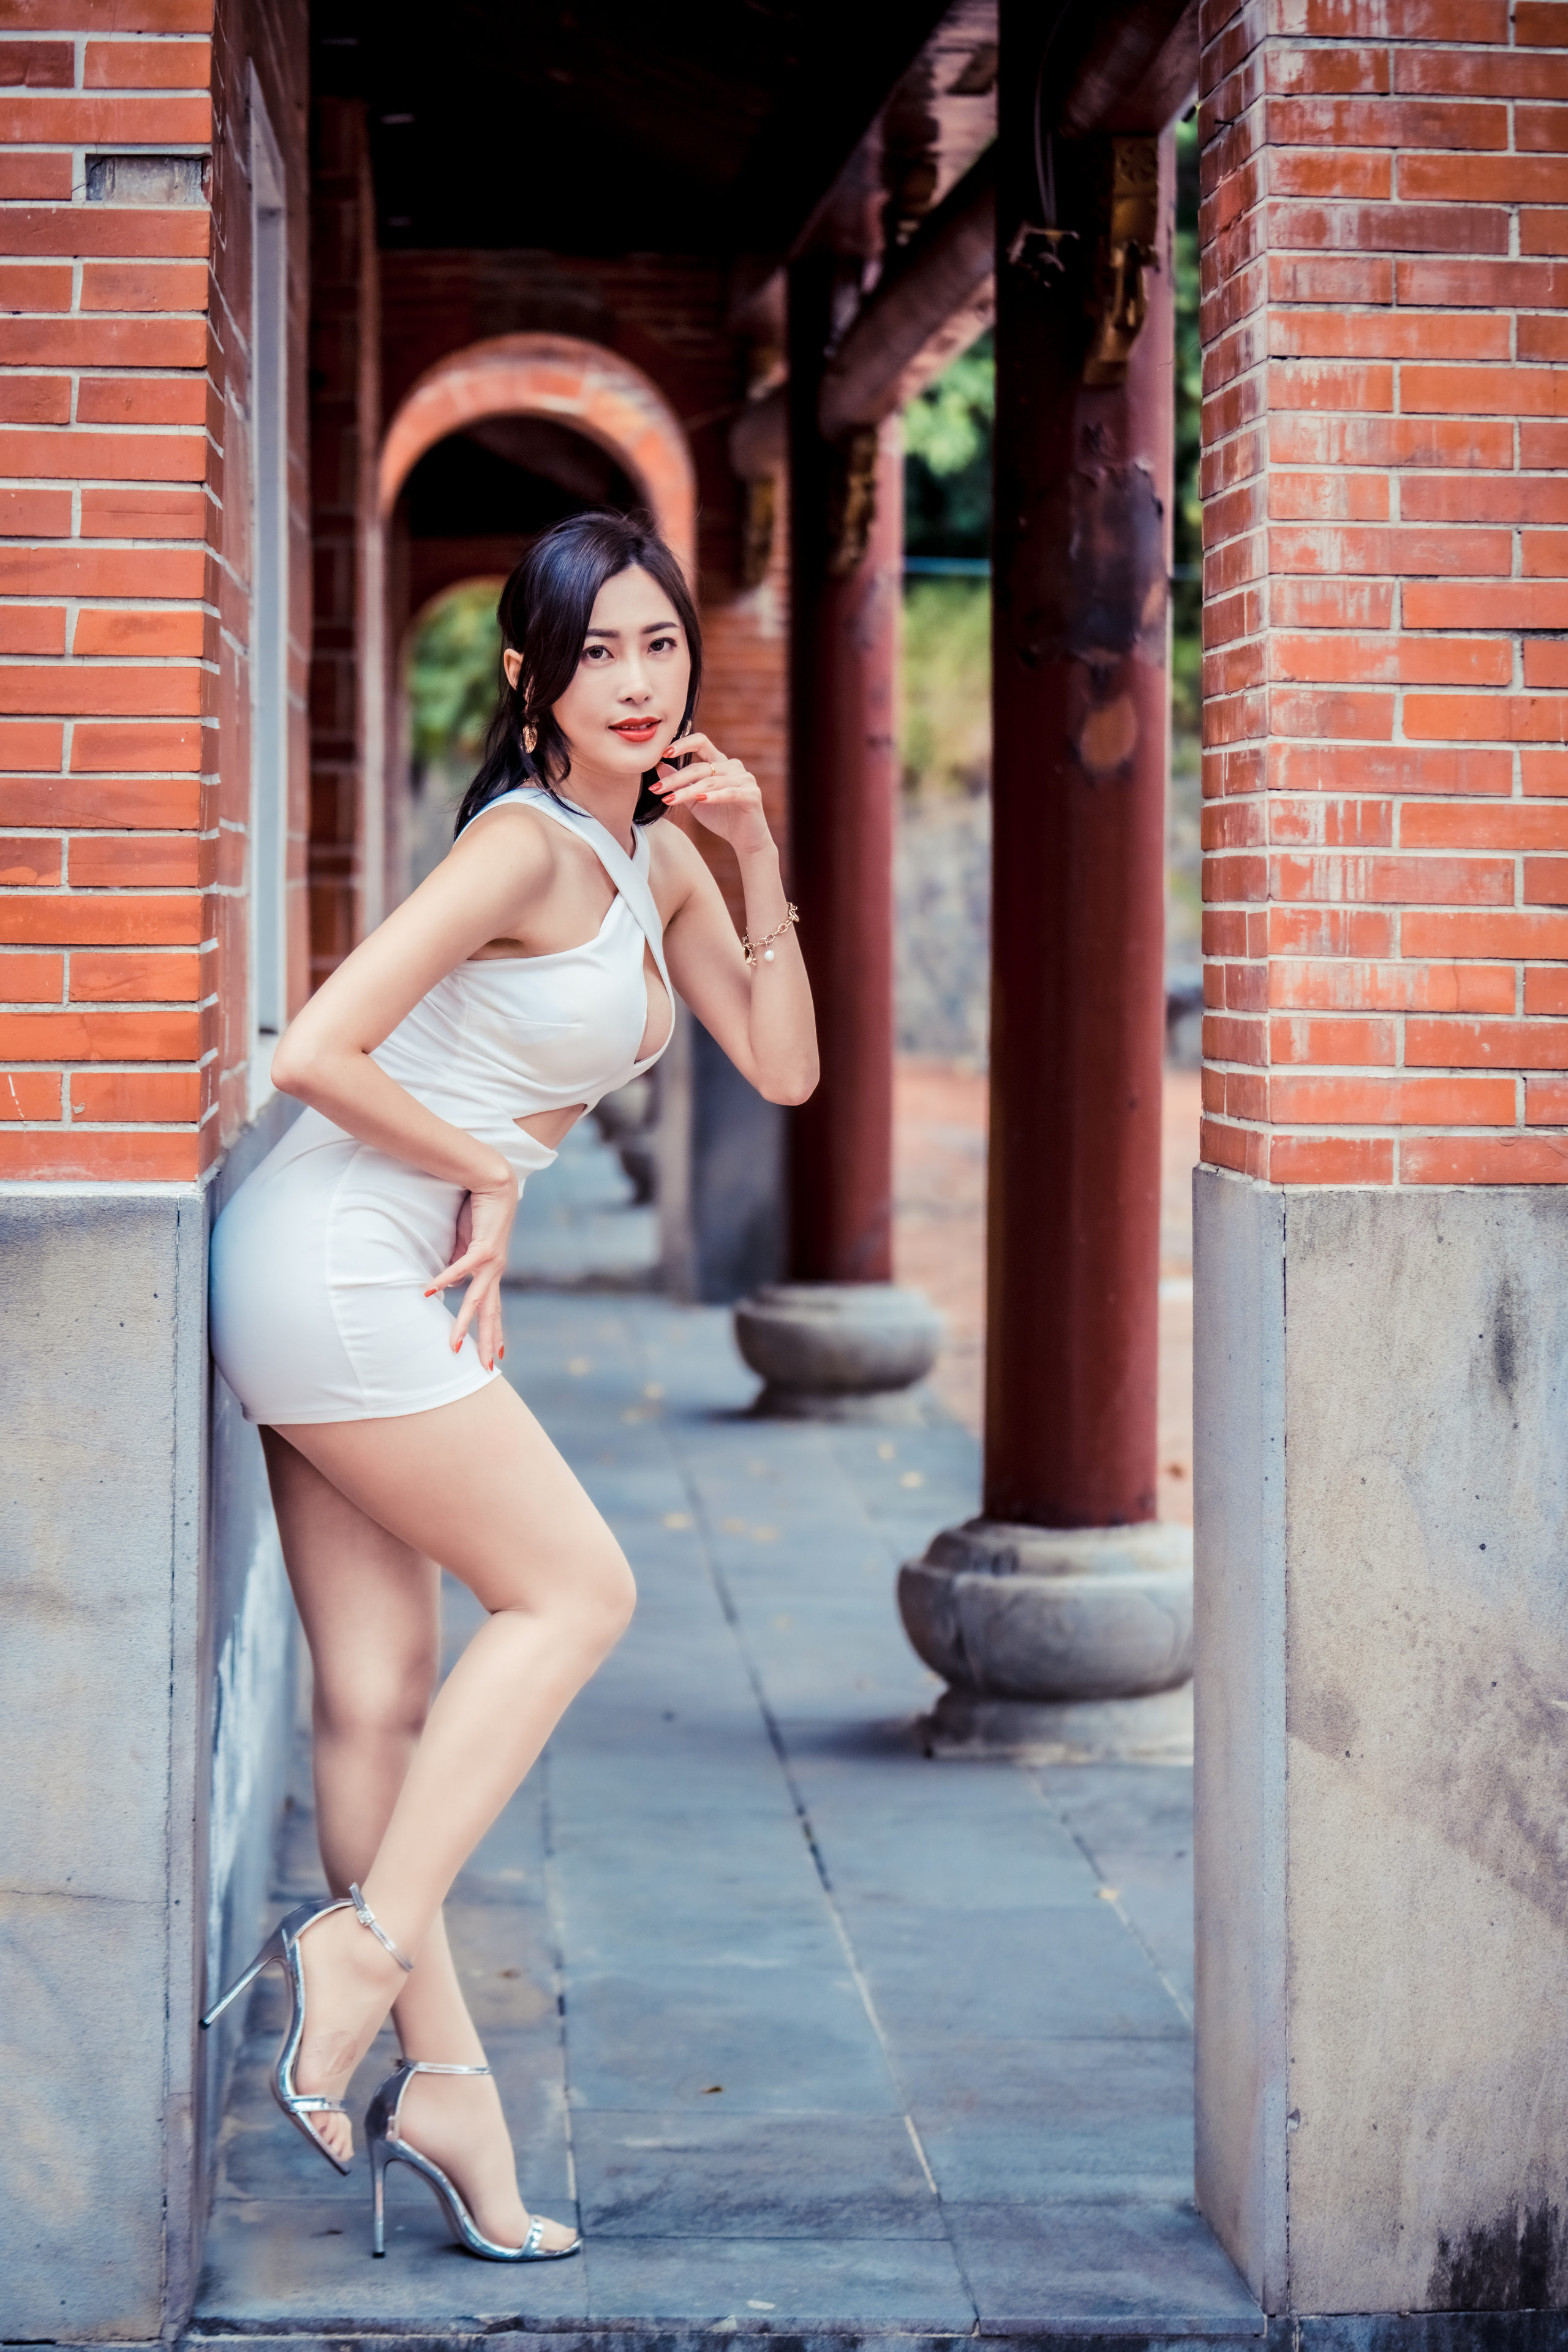 Asian Model Women Dark Hair Long Hair Depth Of Field Bricks Column White Dress Barefoot Sandal Heels 2560x3840